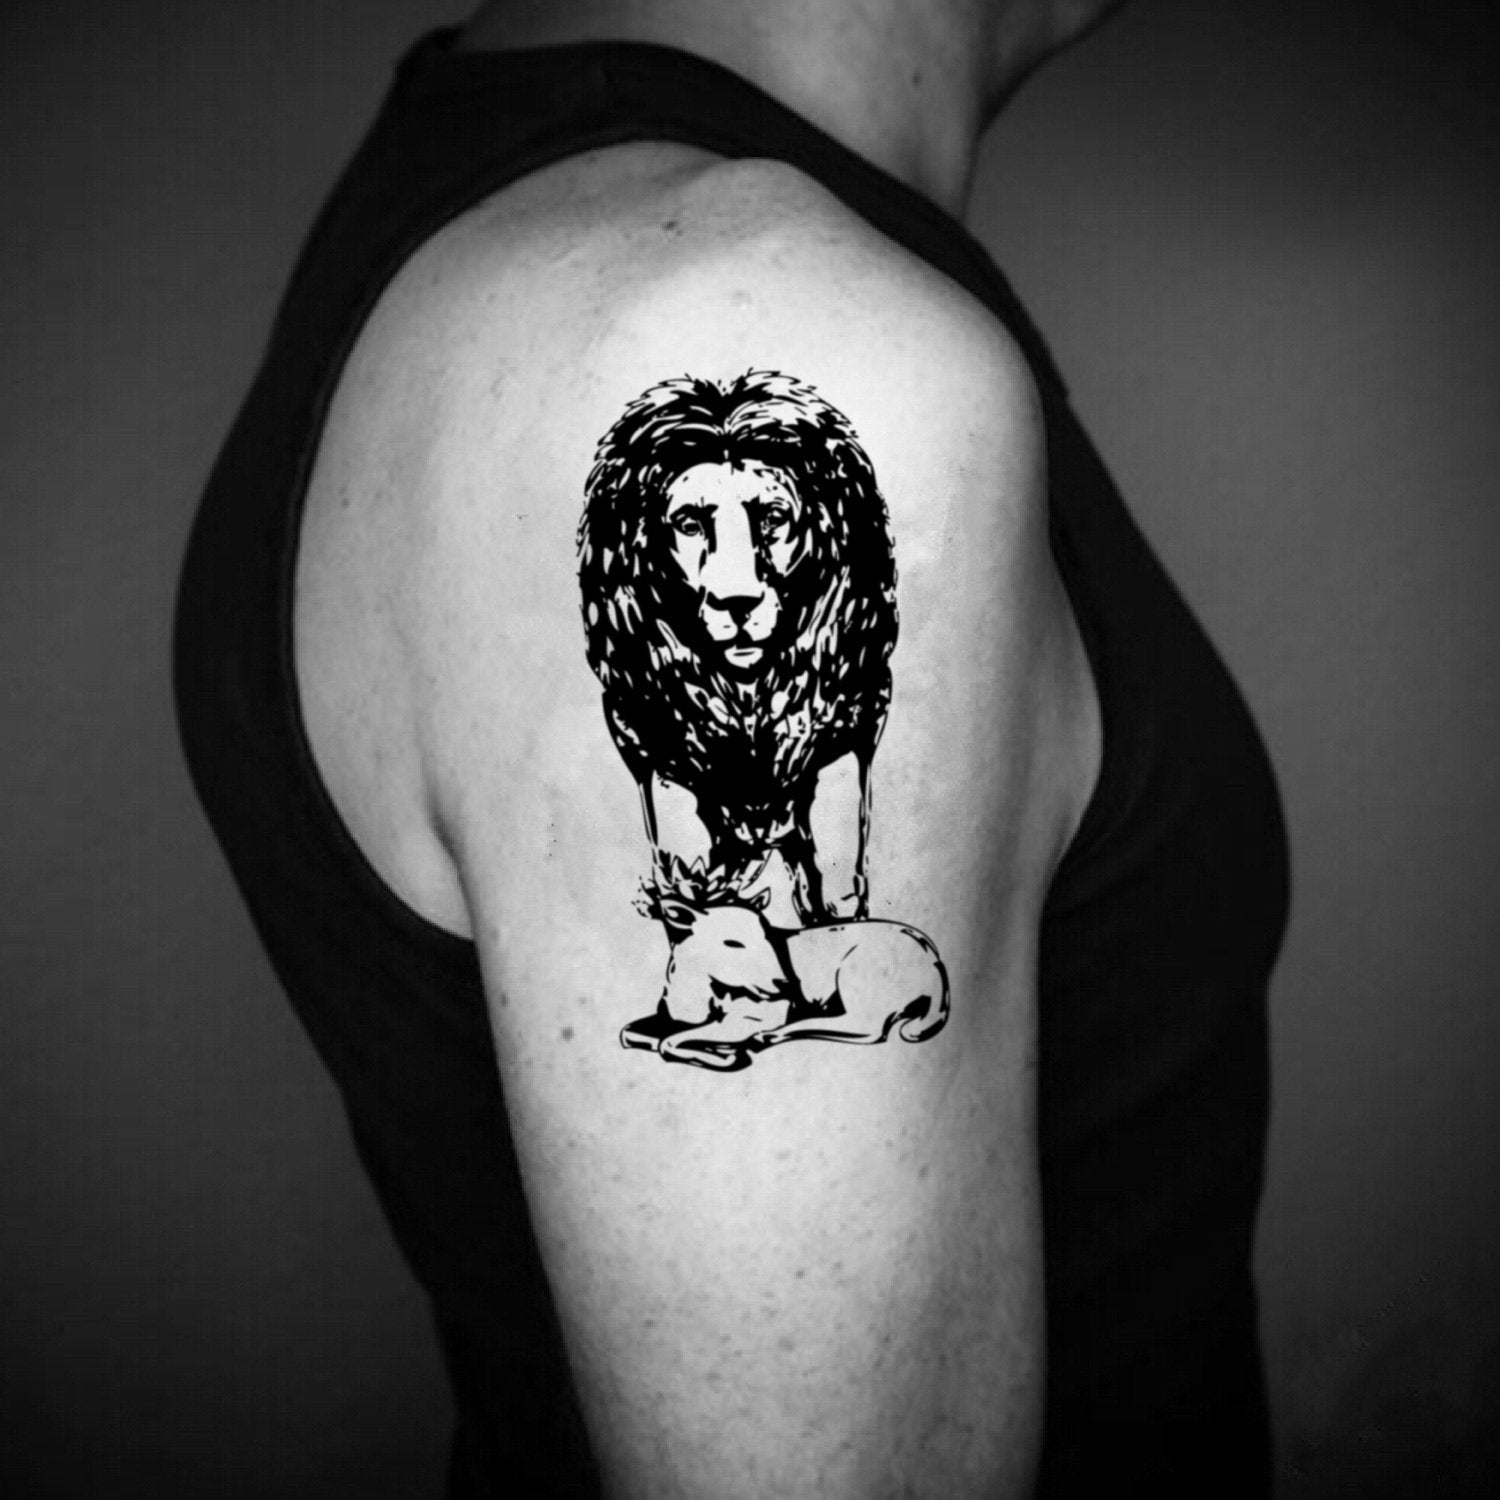 fake medium lion lamb animal temporary tattoo sticker design idea on upper arm